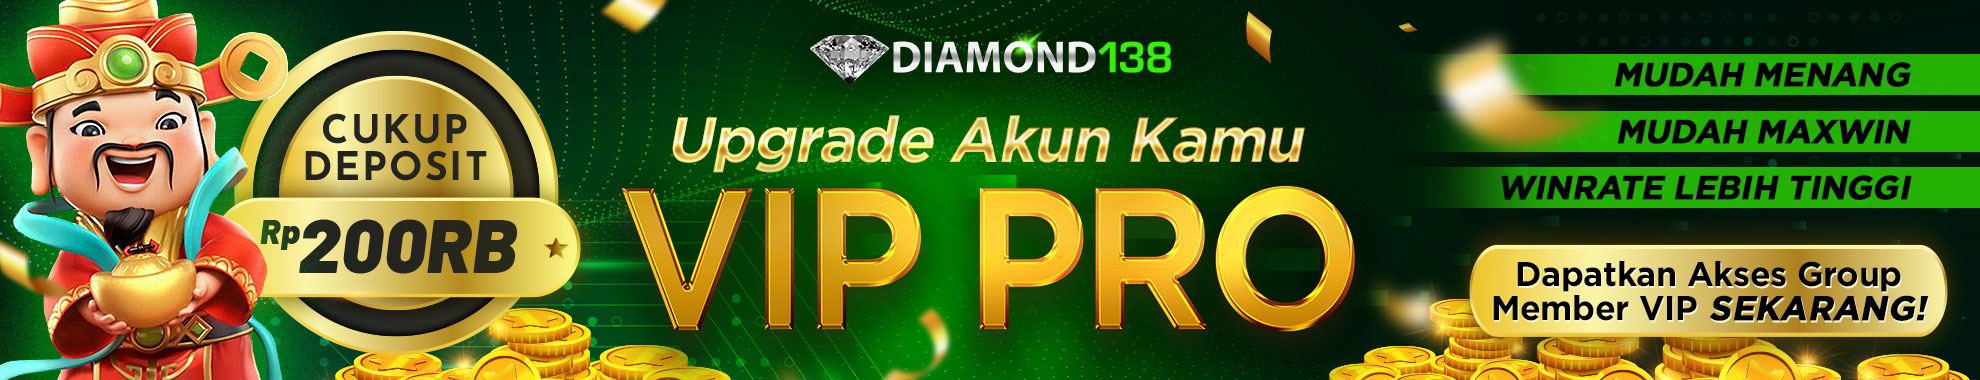 MEMBER VIP PRO DIAMOND138